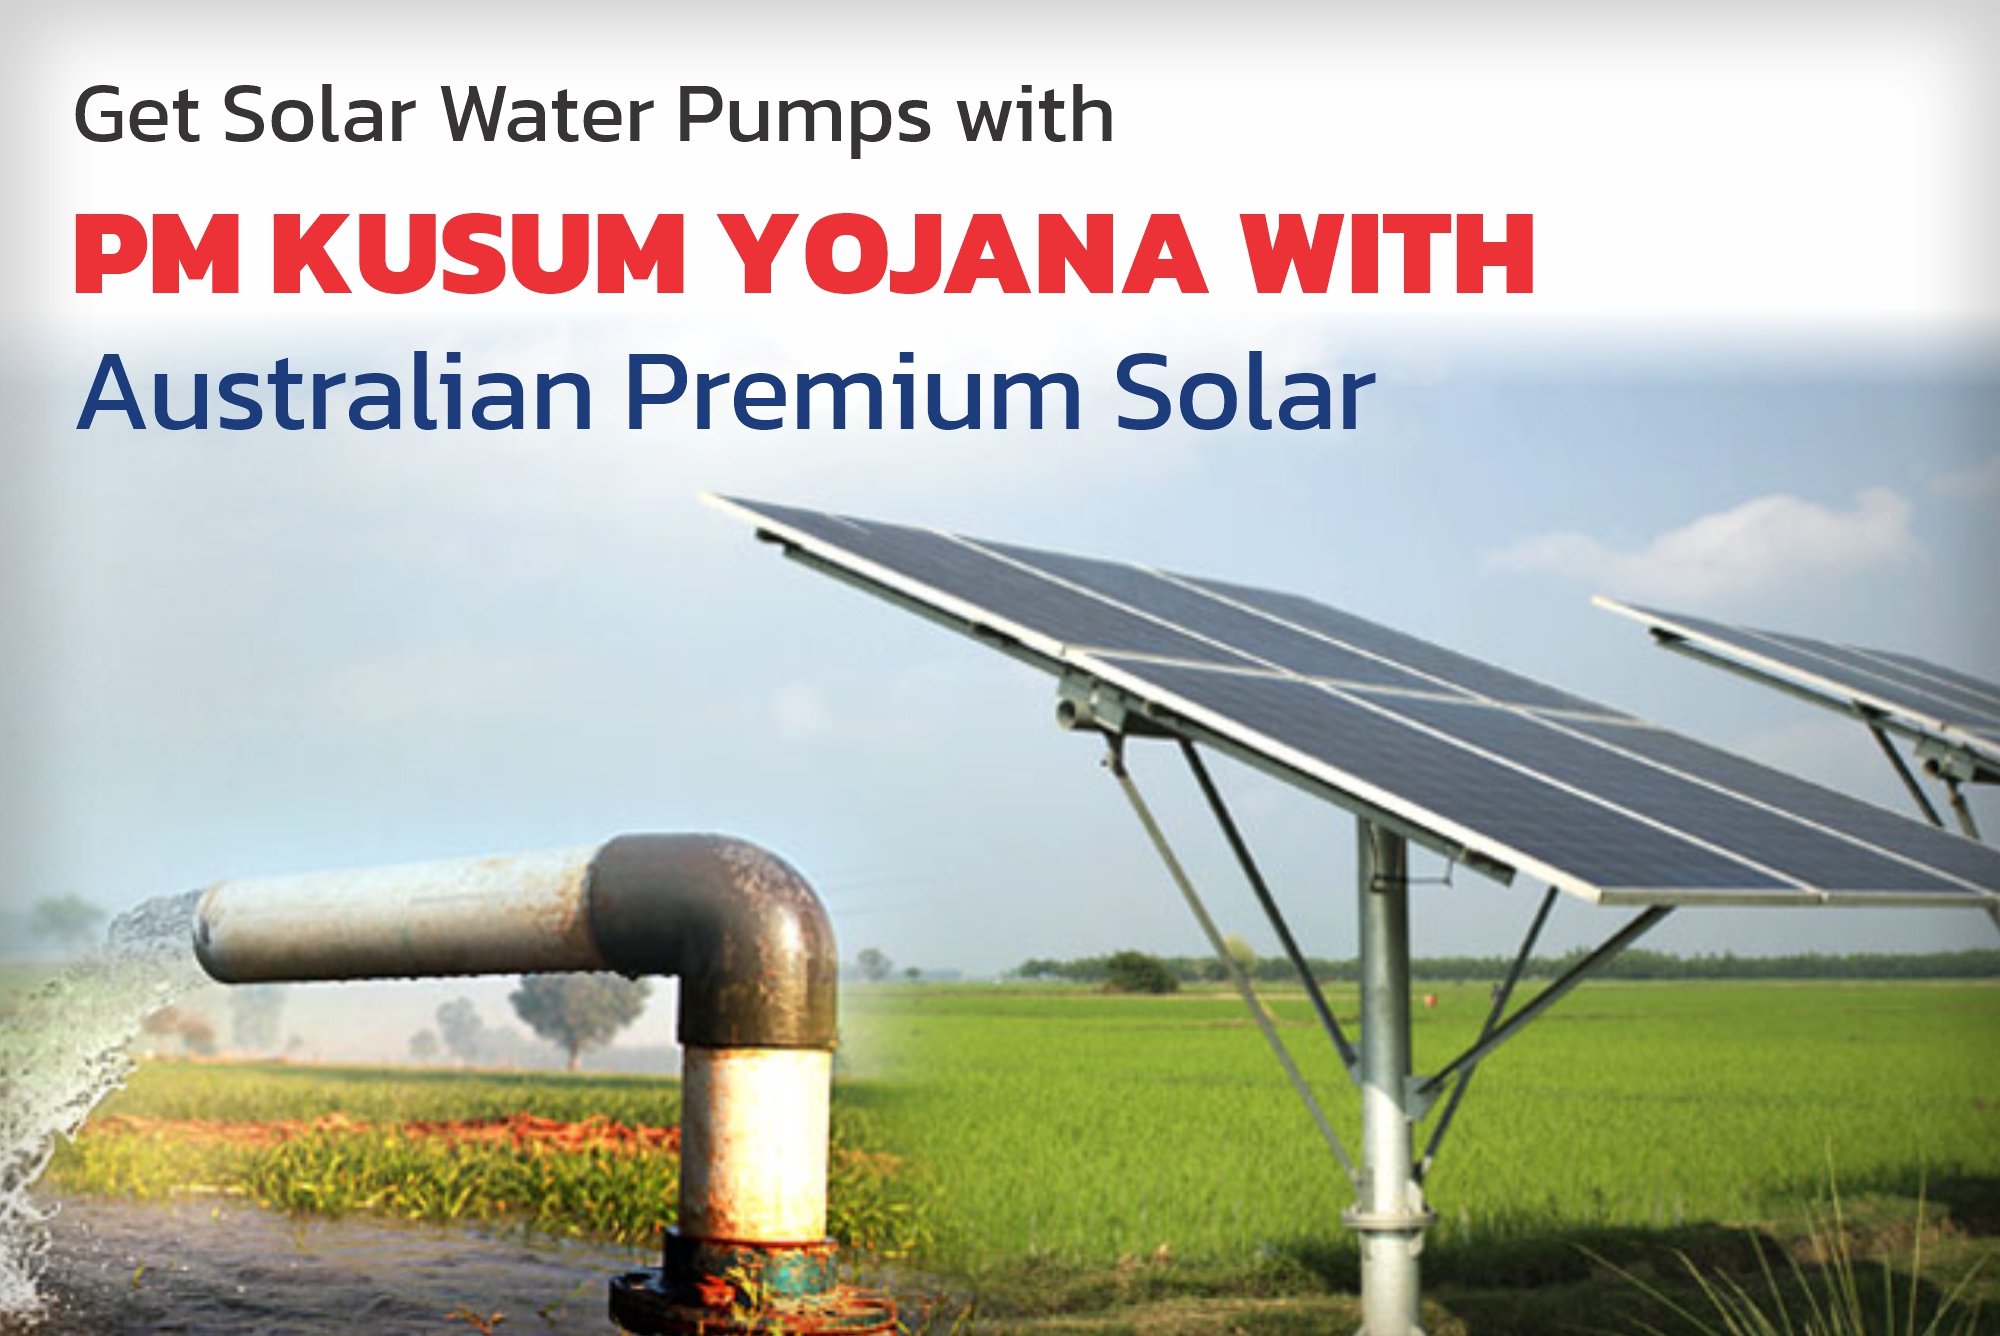 Solar Water Pumps with PM Kusum Yojana at Australian Premium Solar